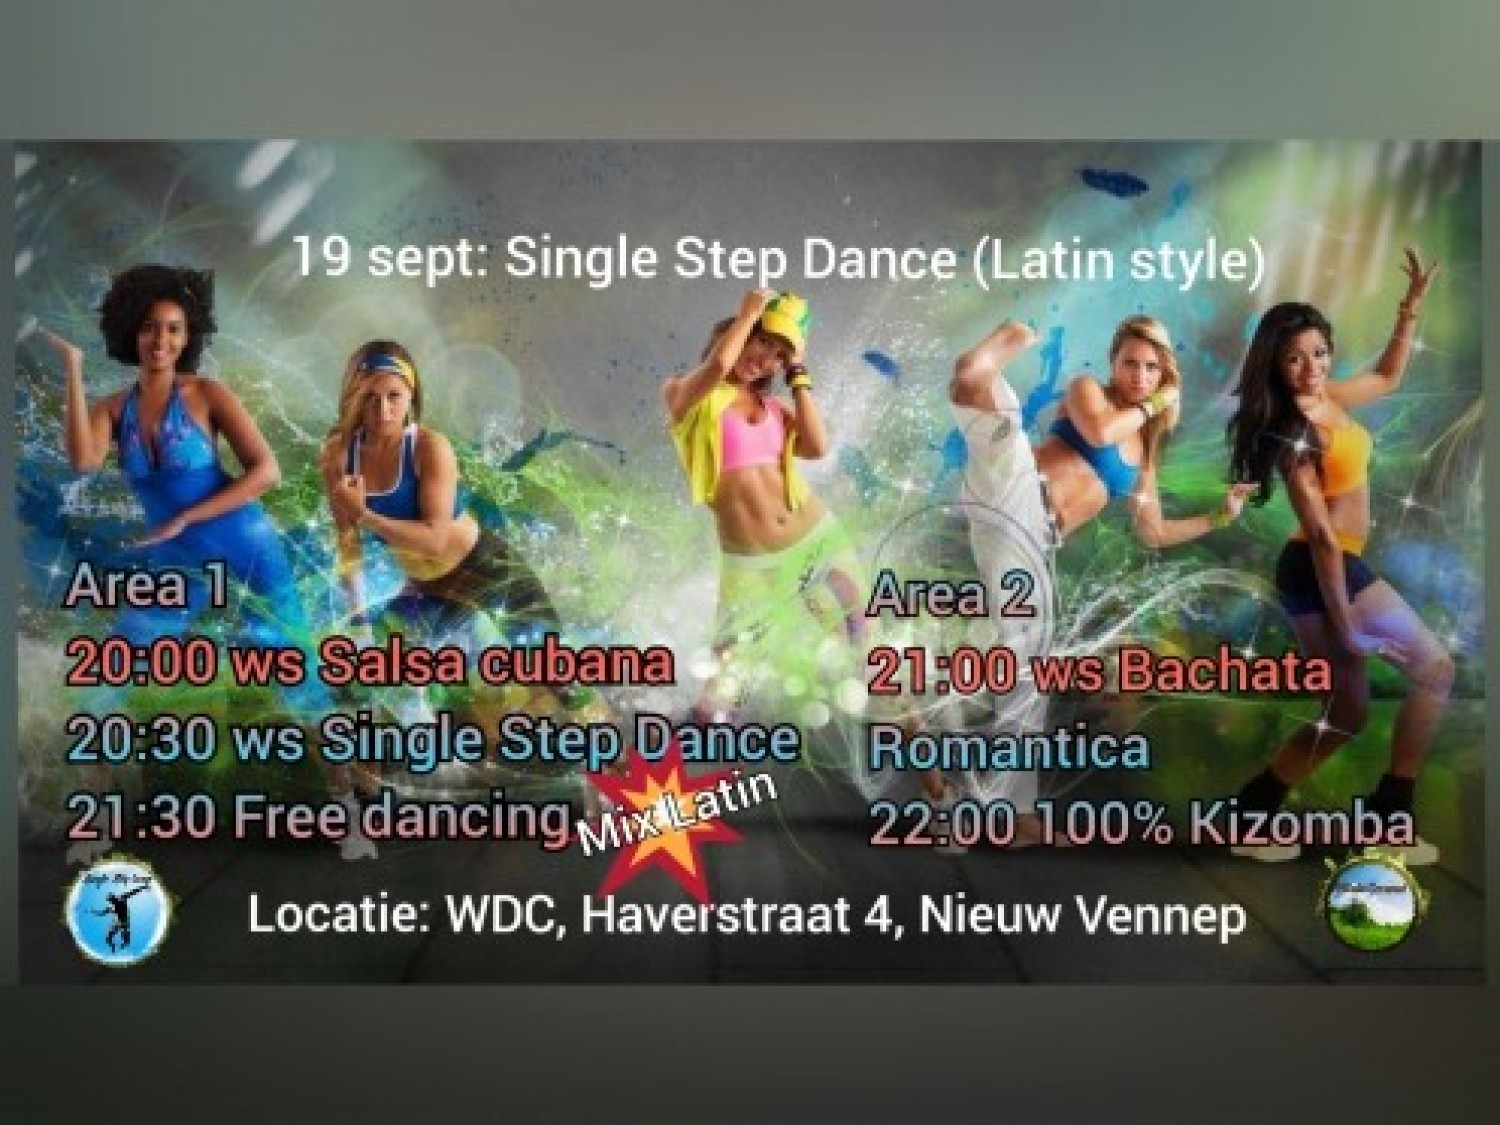 Single Step Dance (Latin style)